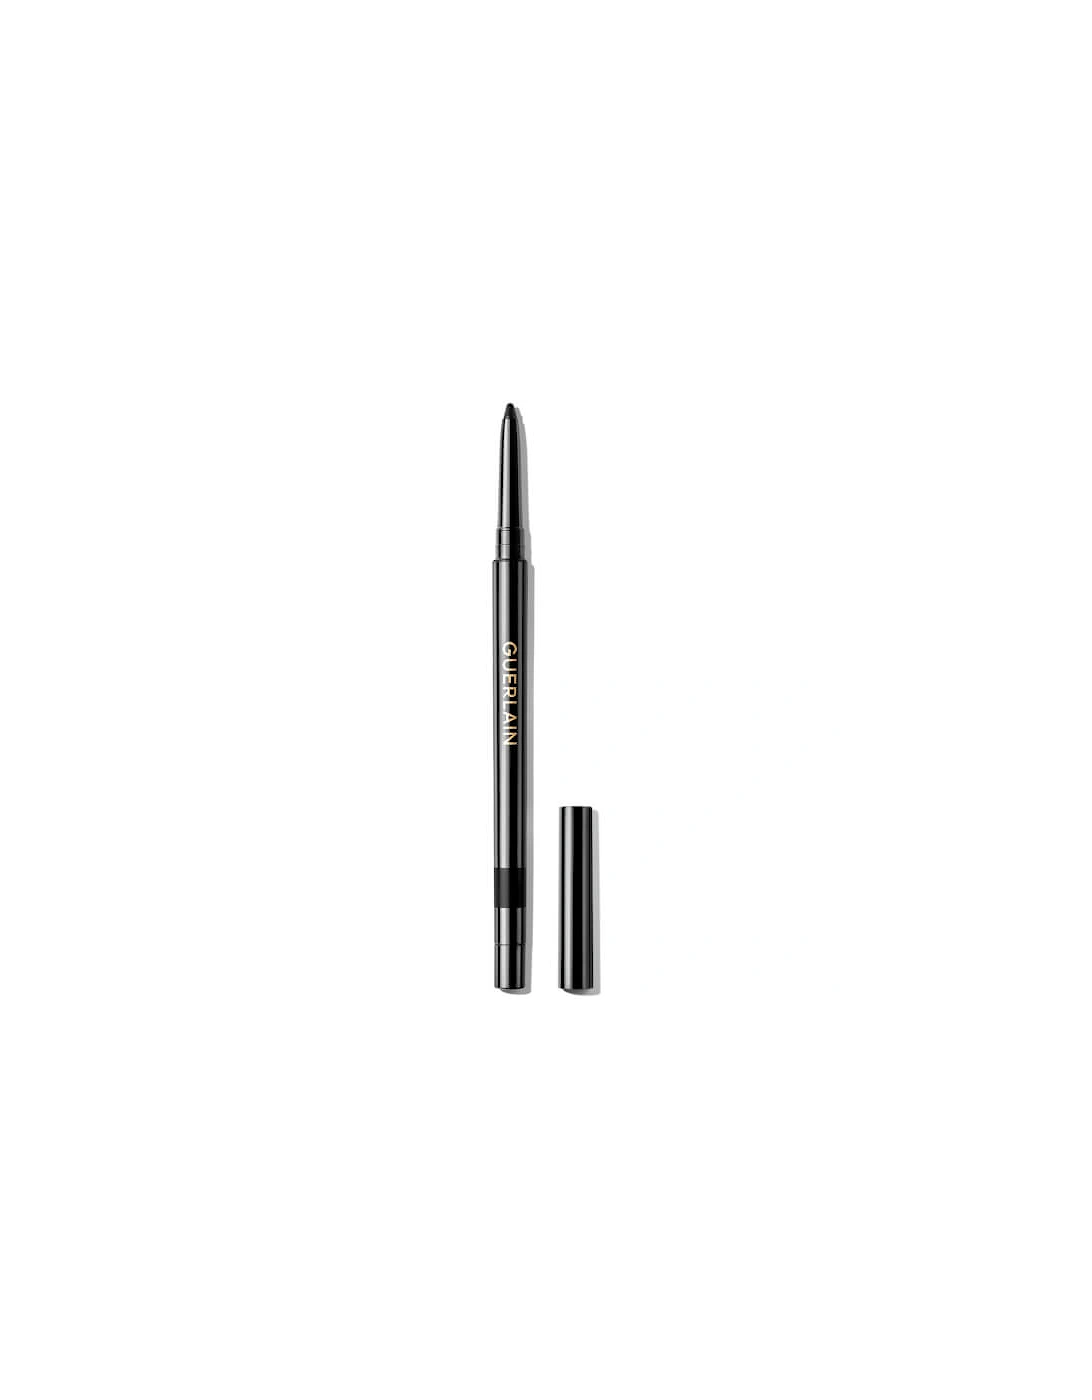 The Eye Pencil Intense Colour Long-Lasting and Waterproof - 01 Black Ebony, 2 of 1